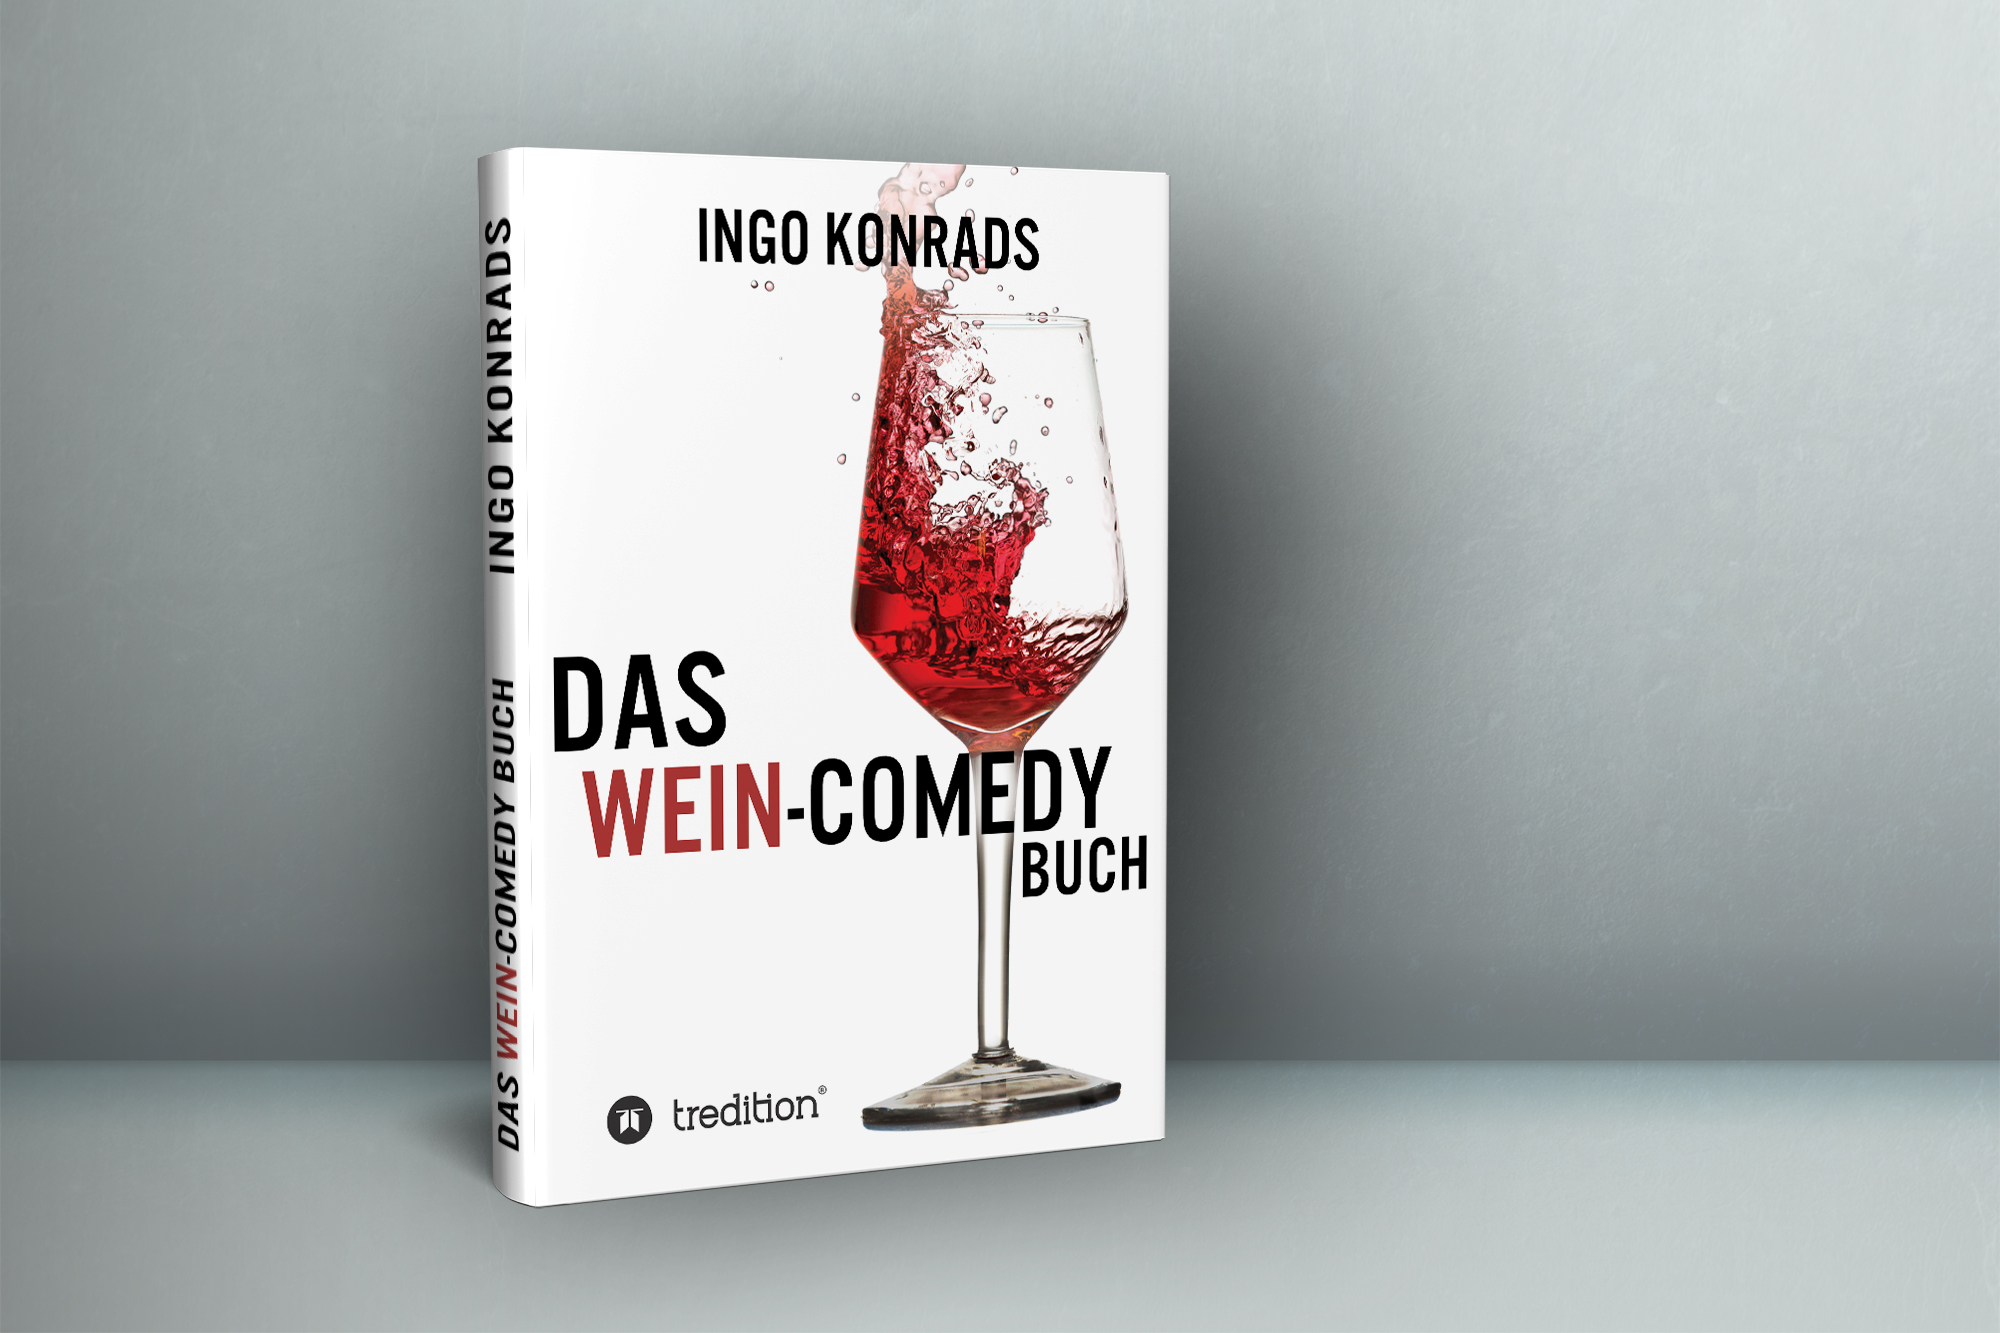 Wein-Comedy Buch